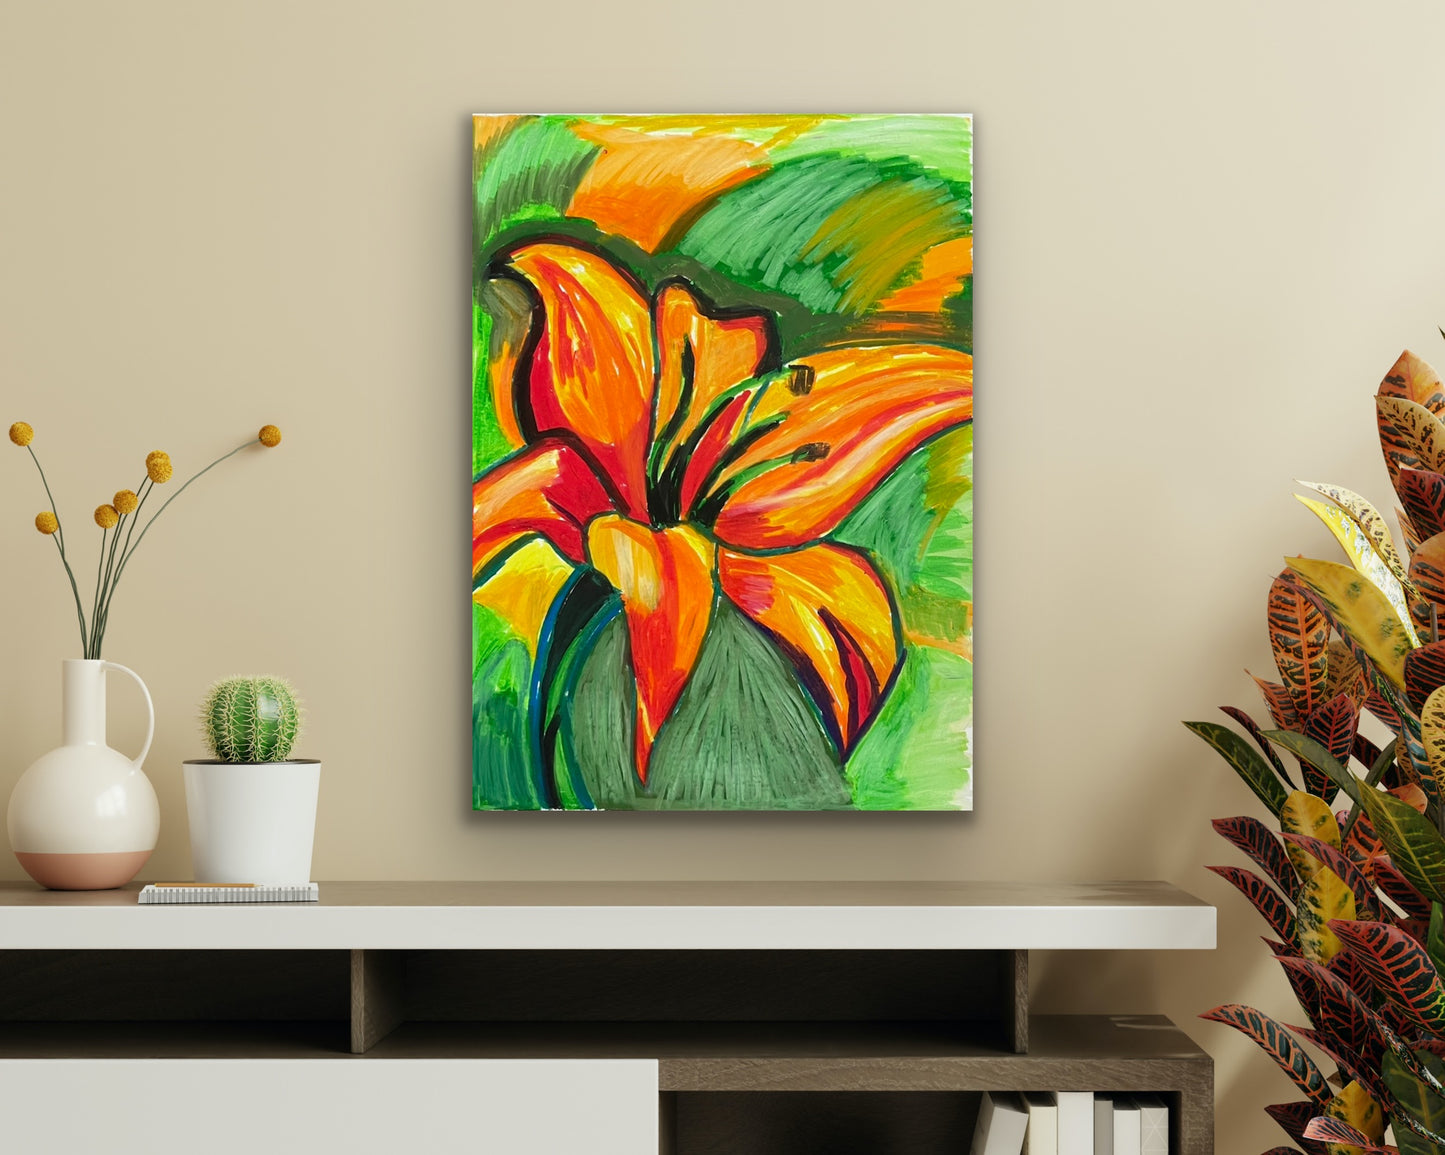 Fire Lily  - ORIGINAL oil pastel 9x12"